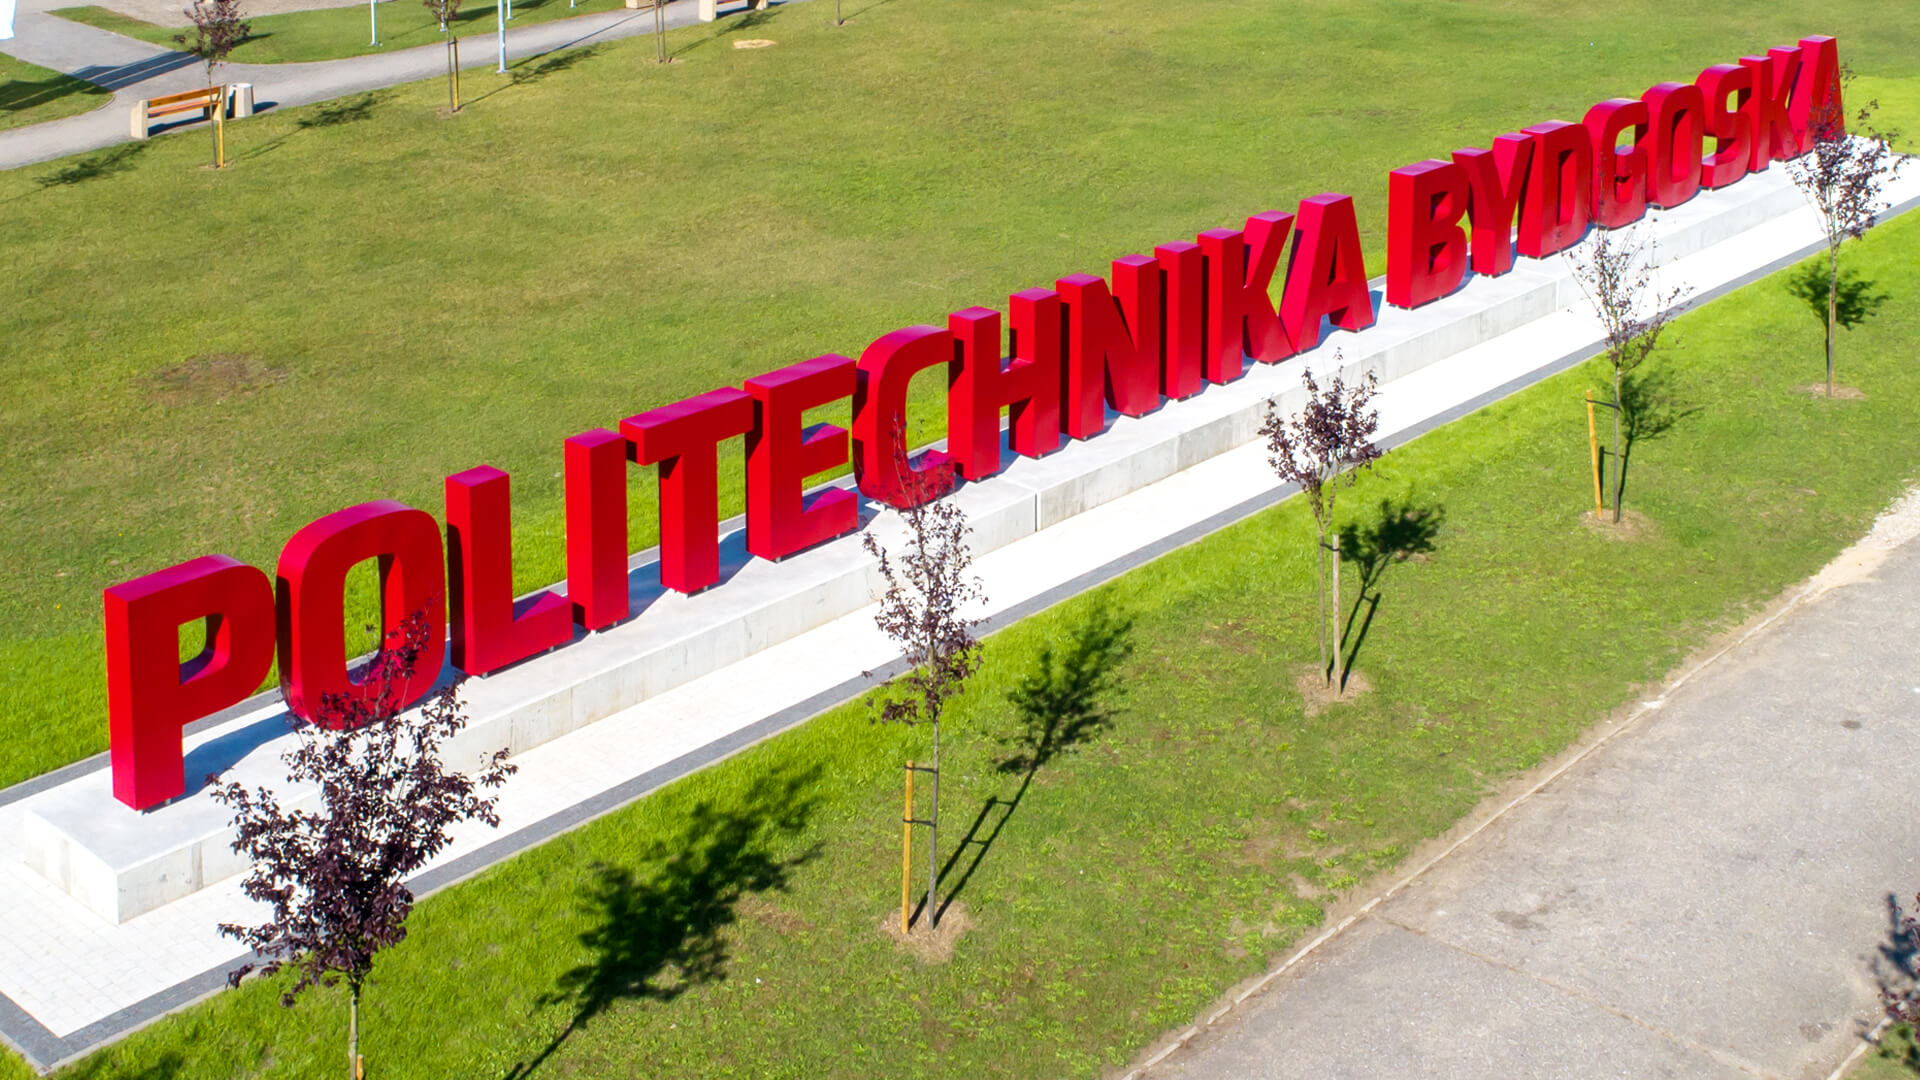 Bydgoszcz University of Technology - polytechnic university of Bydgoszcz large format letters in black